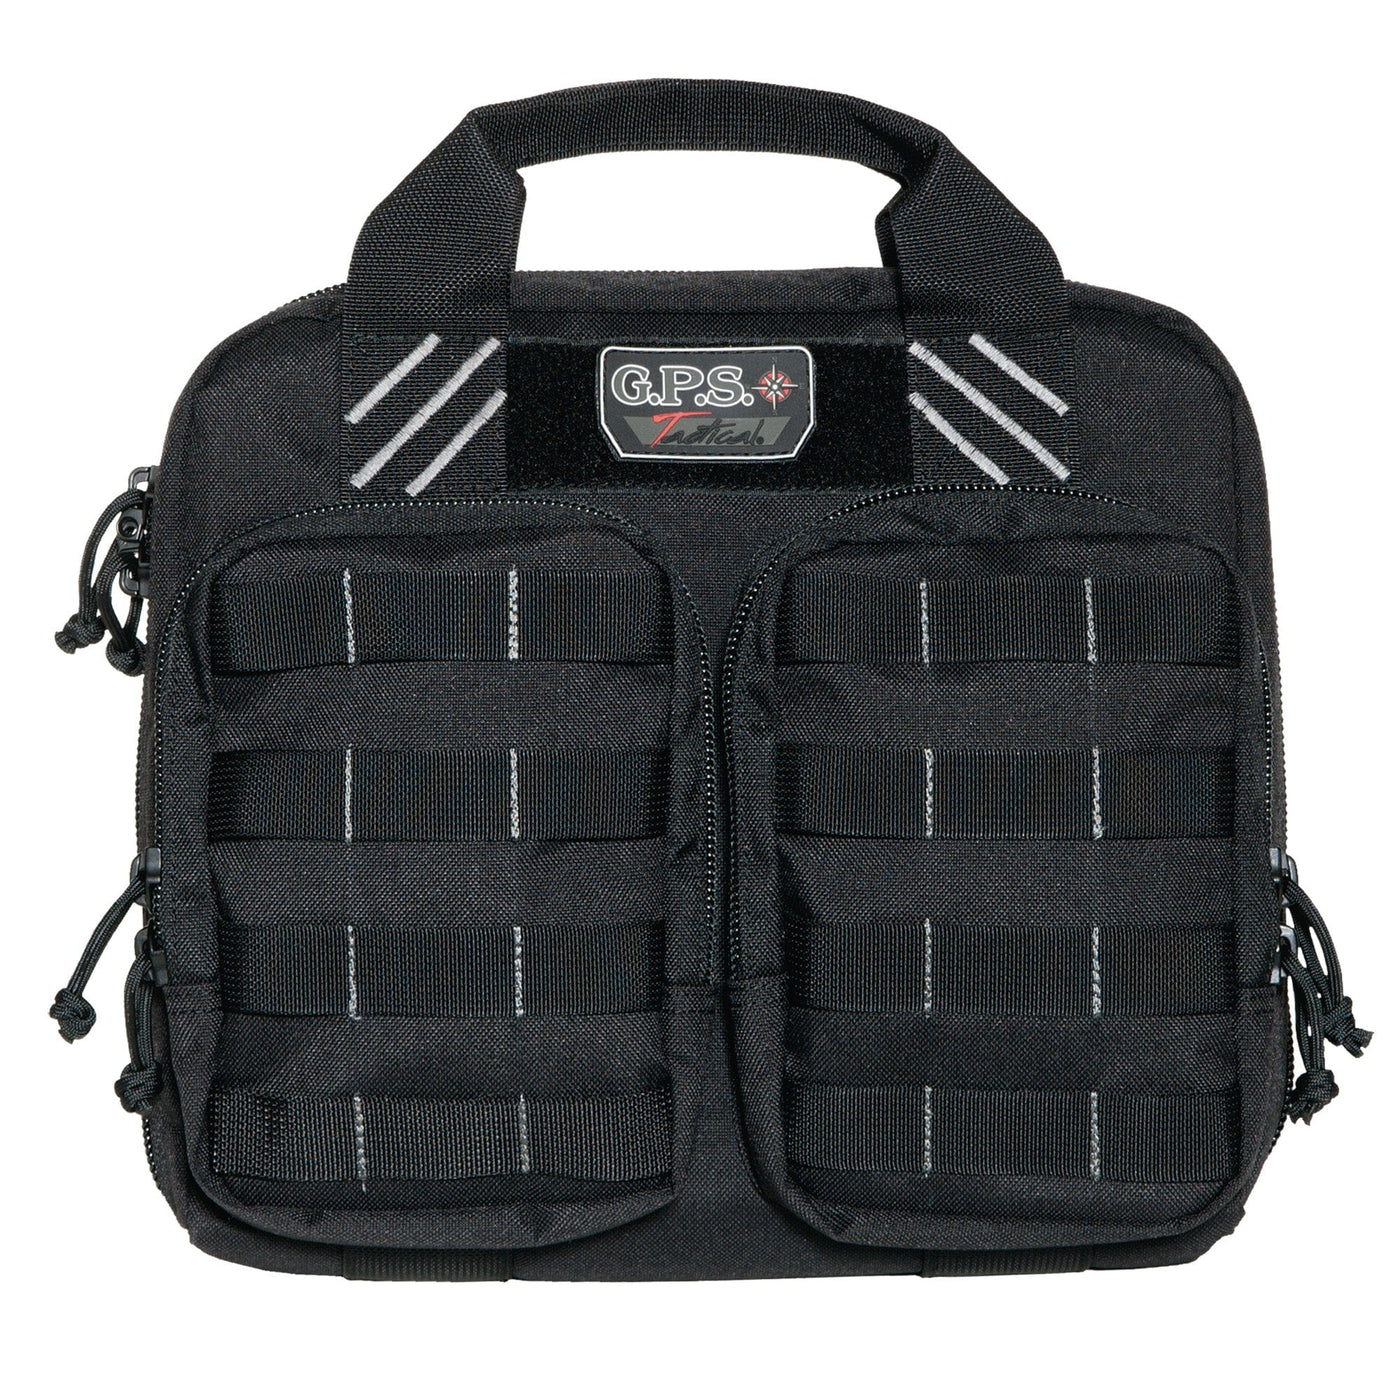 GPS Gps Tac Double Range Bag Black Soft Gun Cases